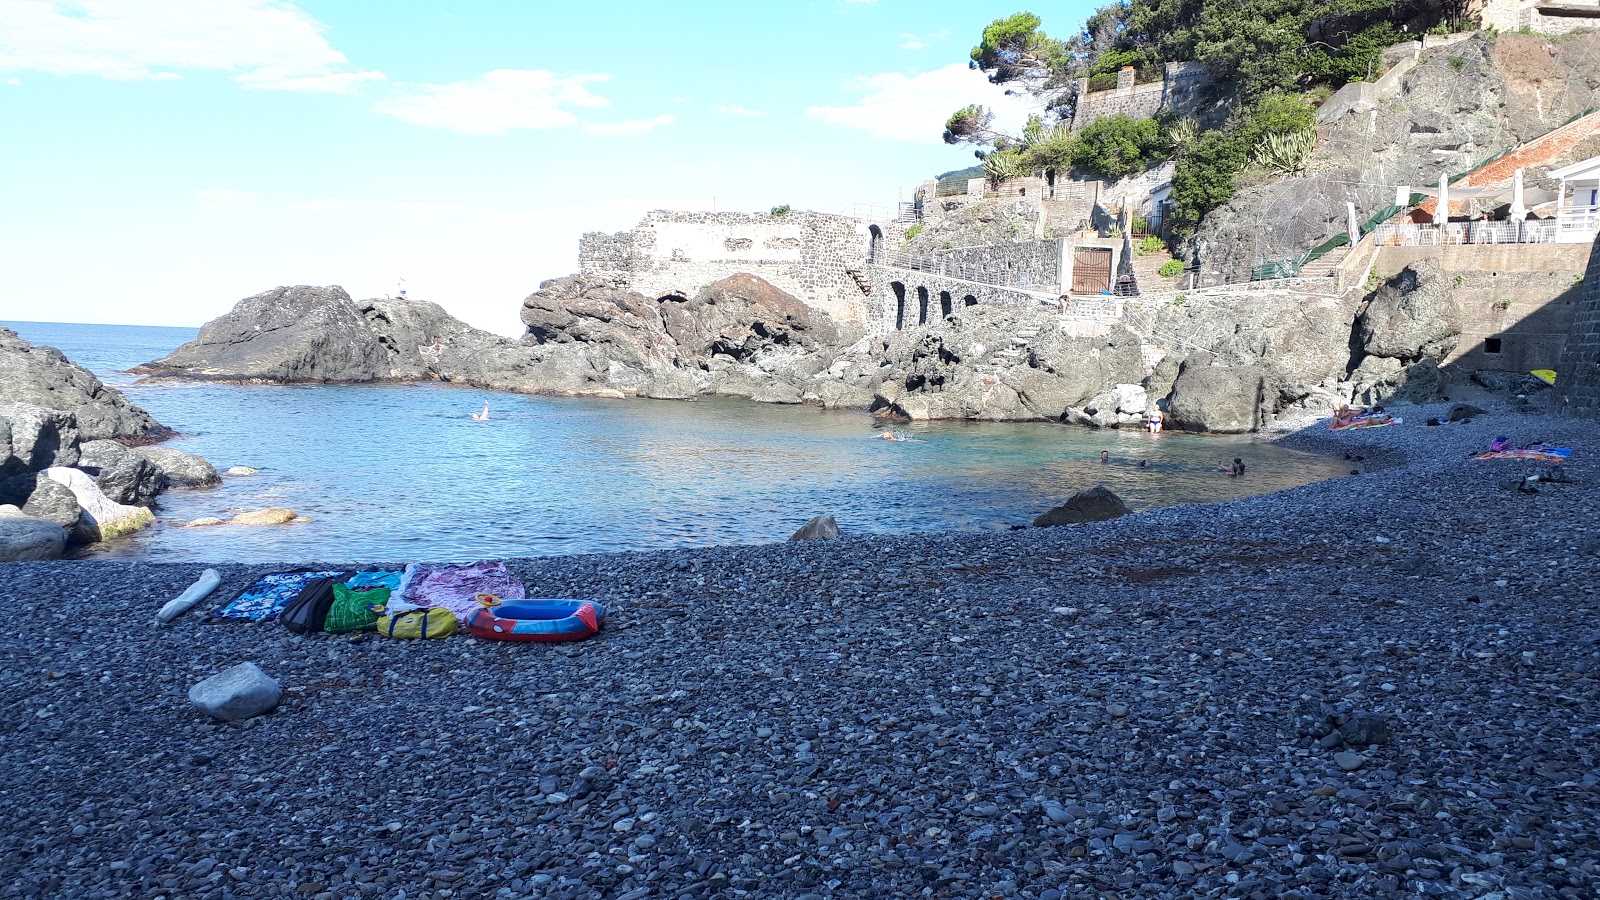 Foto av Spiaggia Torsei med hög nivå av renlighet